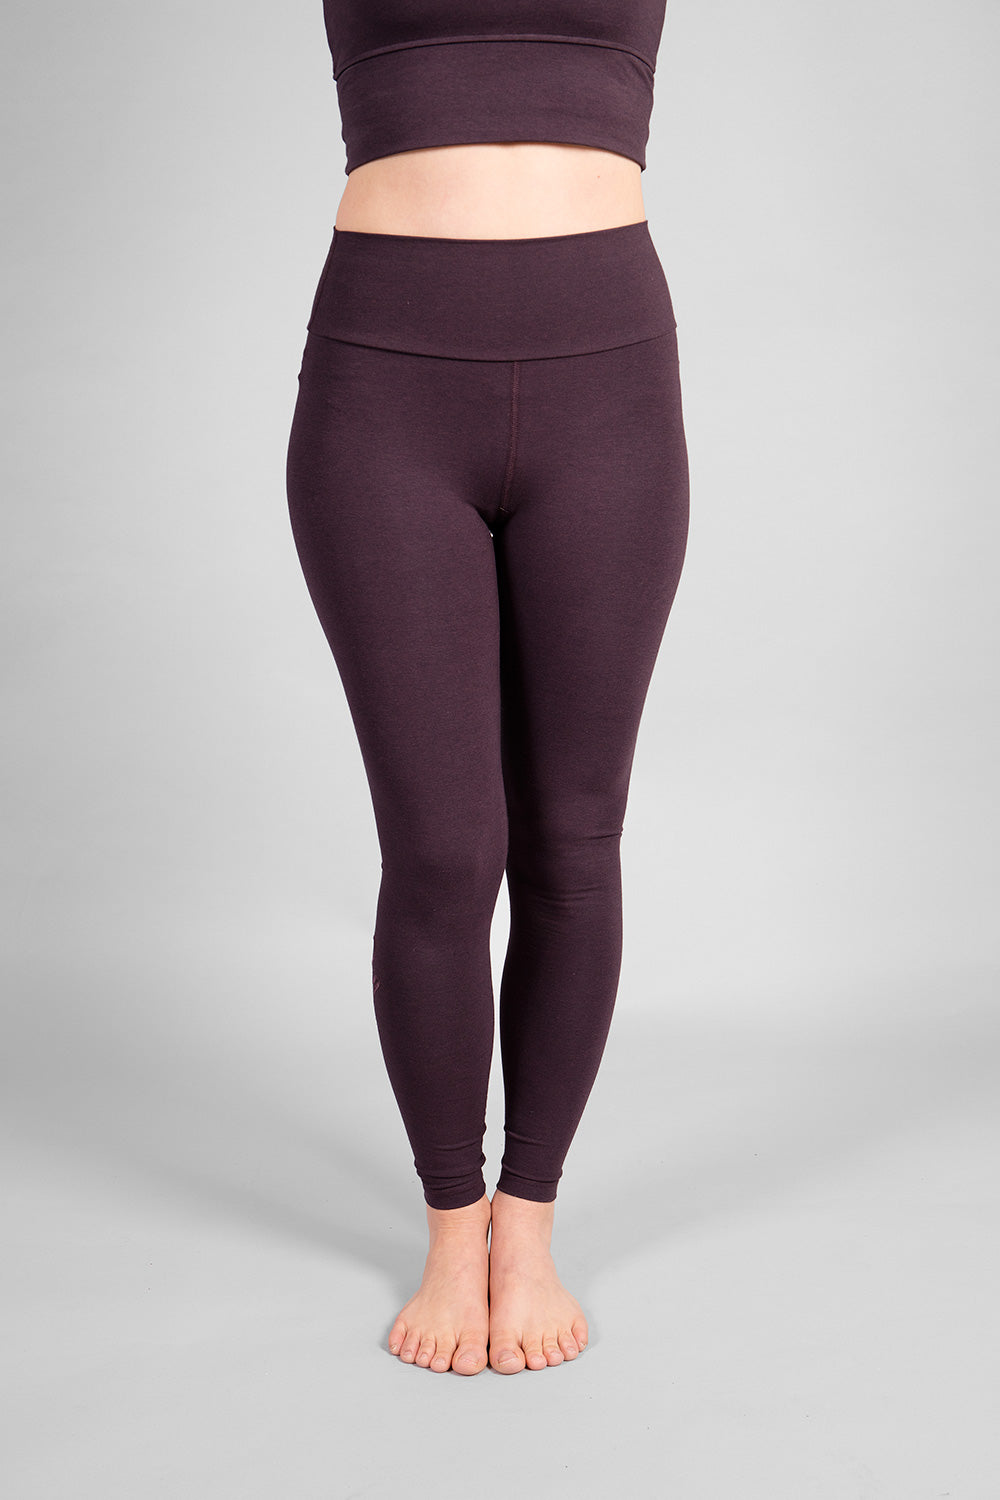 Dark purple yoga clothes – Breath of Fire Eco & Yoga Fashion